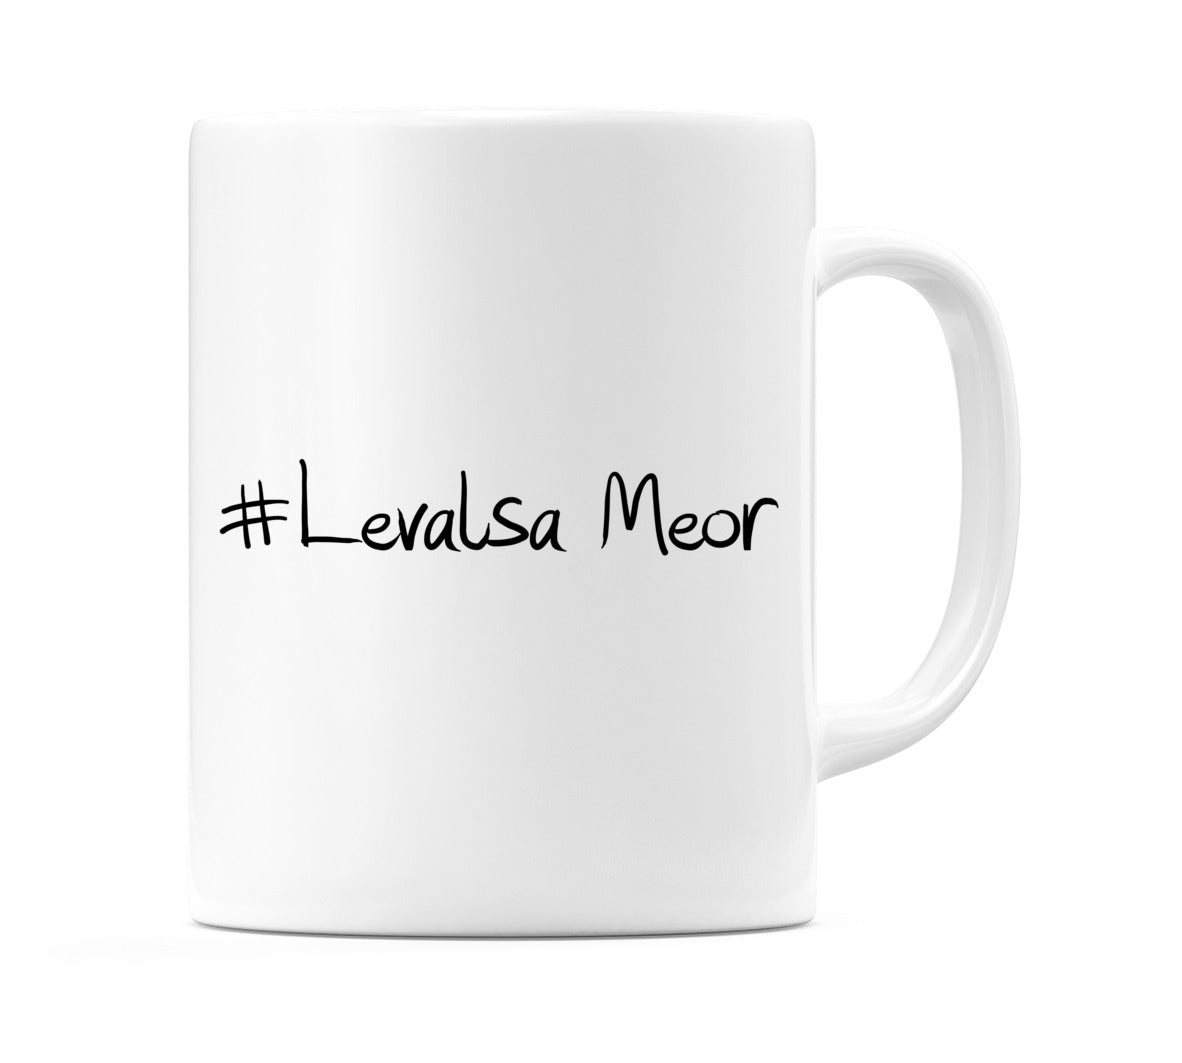 #Levalsa Meor Mug